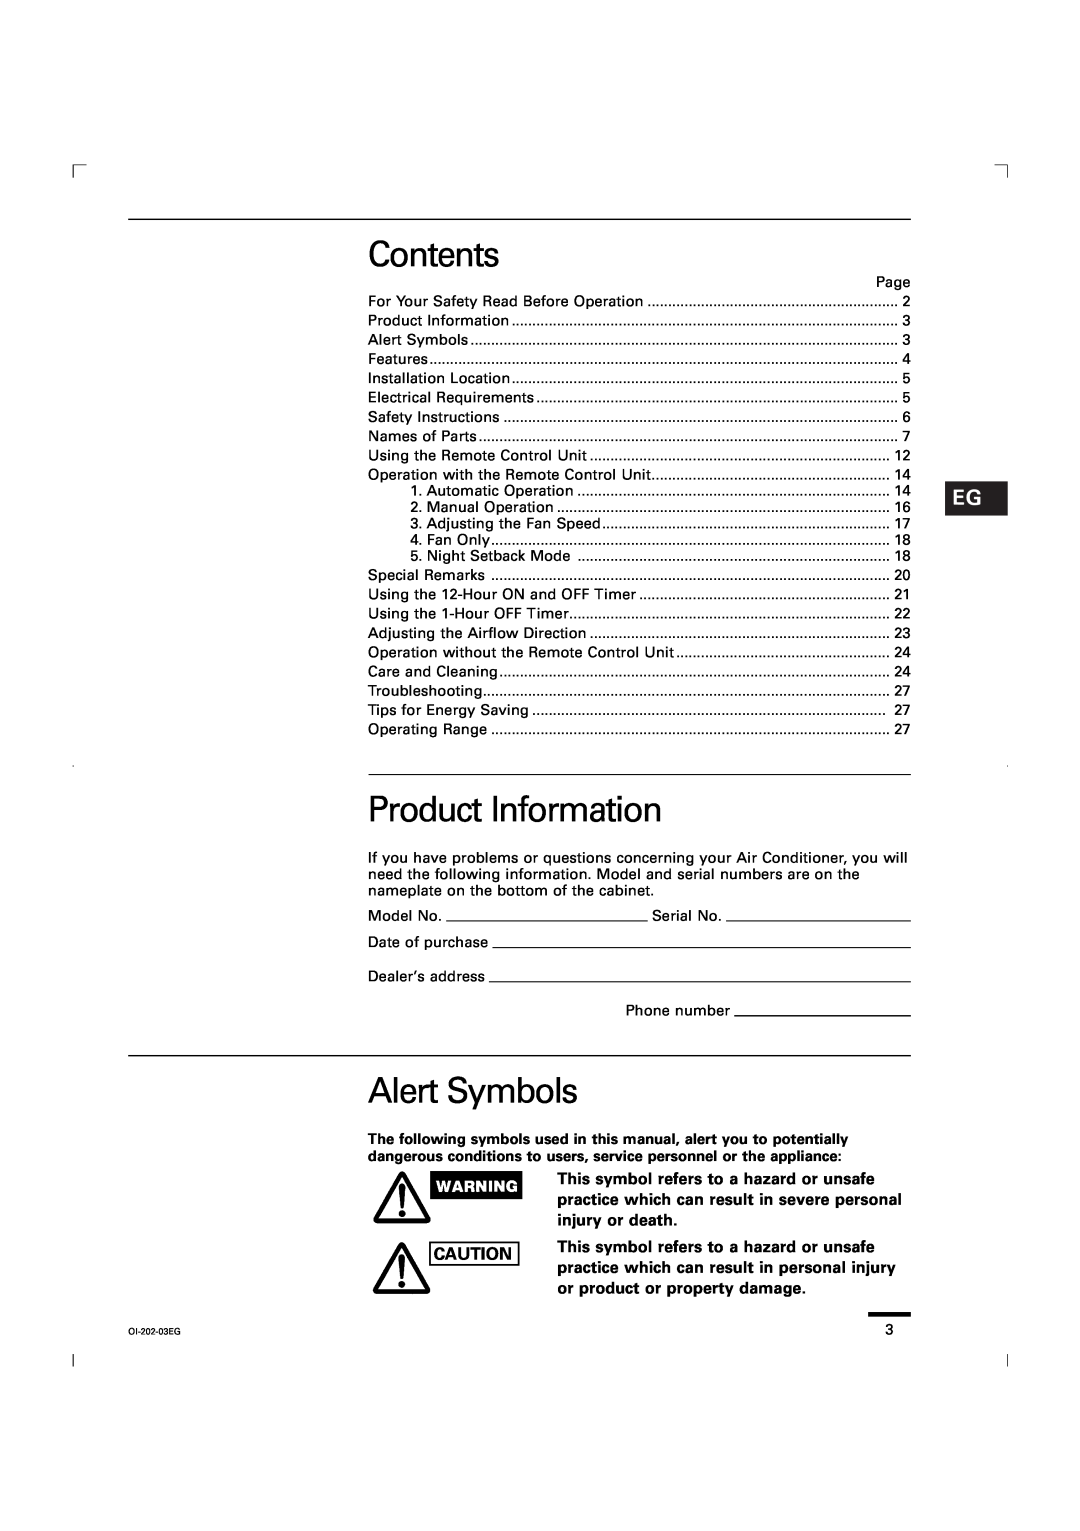 Sanyo KGS1411, CG1411 service manual Contents, Product Information, Alert Symbols 